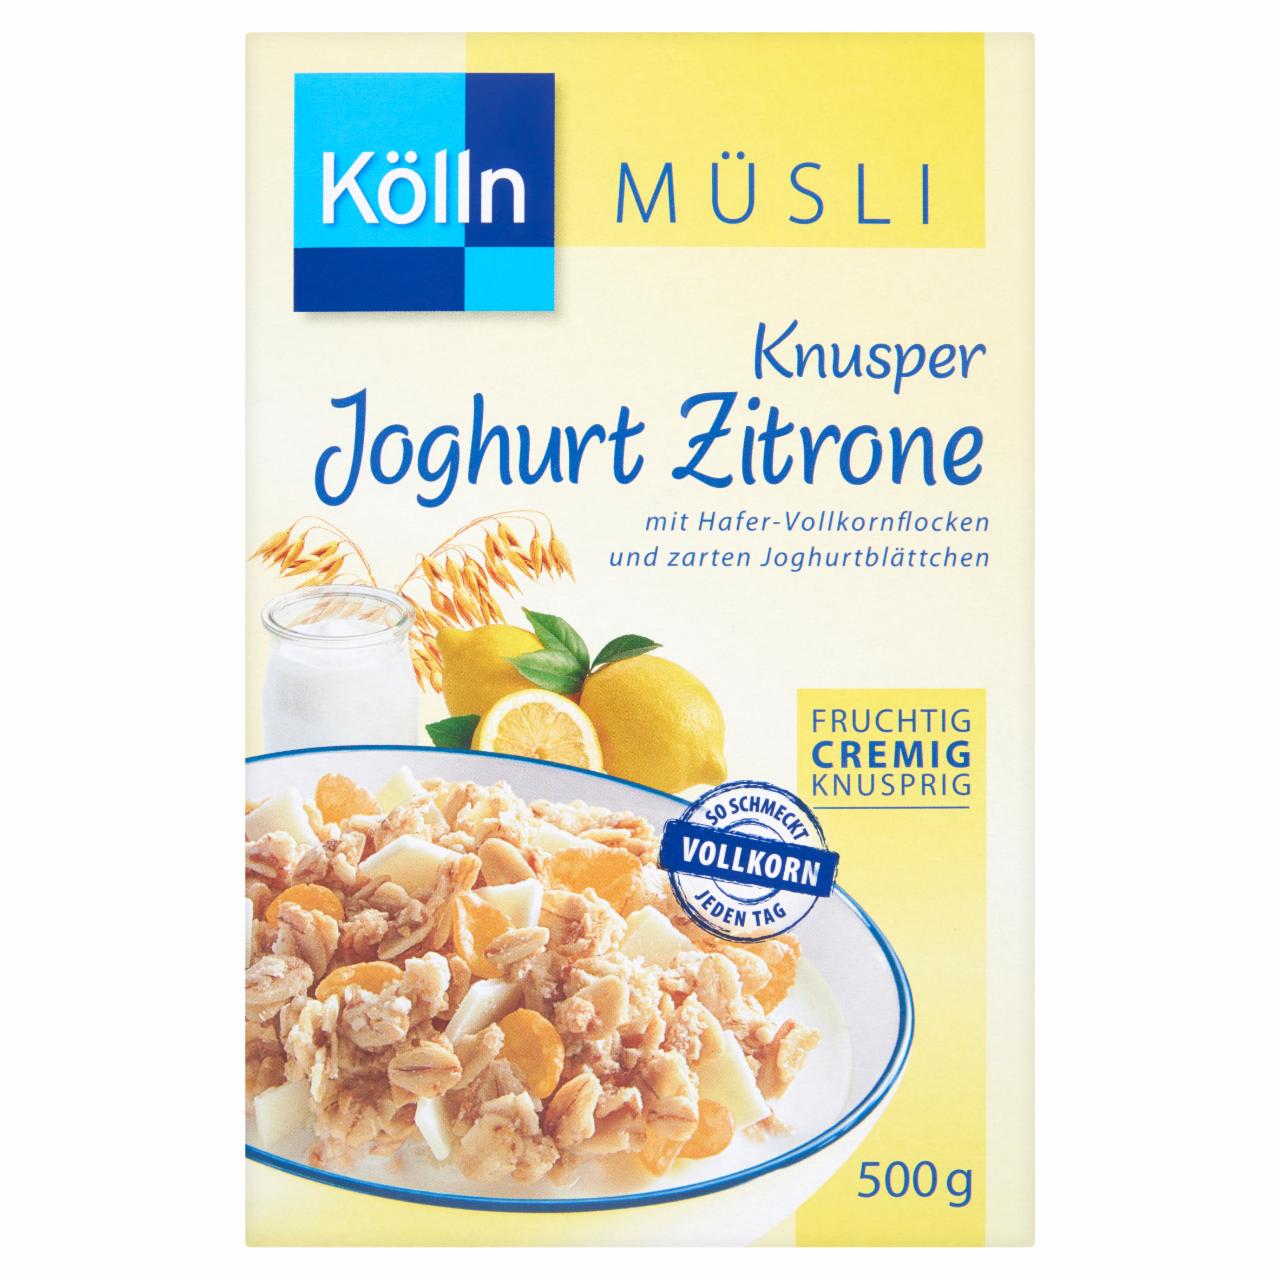 Képek - Kölln joghurt-citrom ropogós müzli 500 g